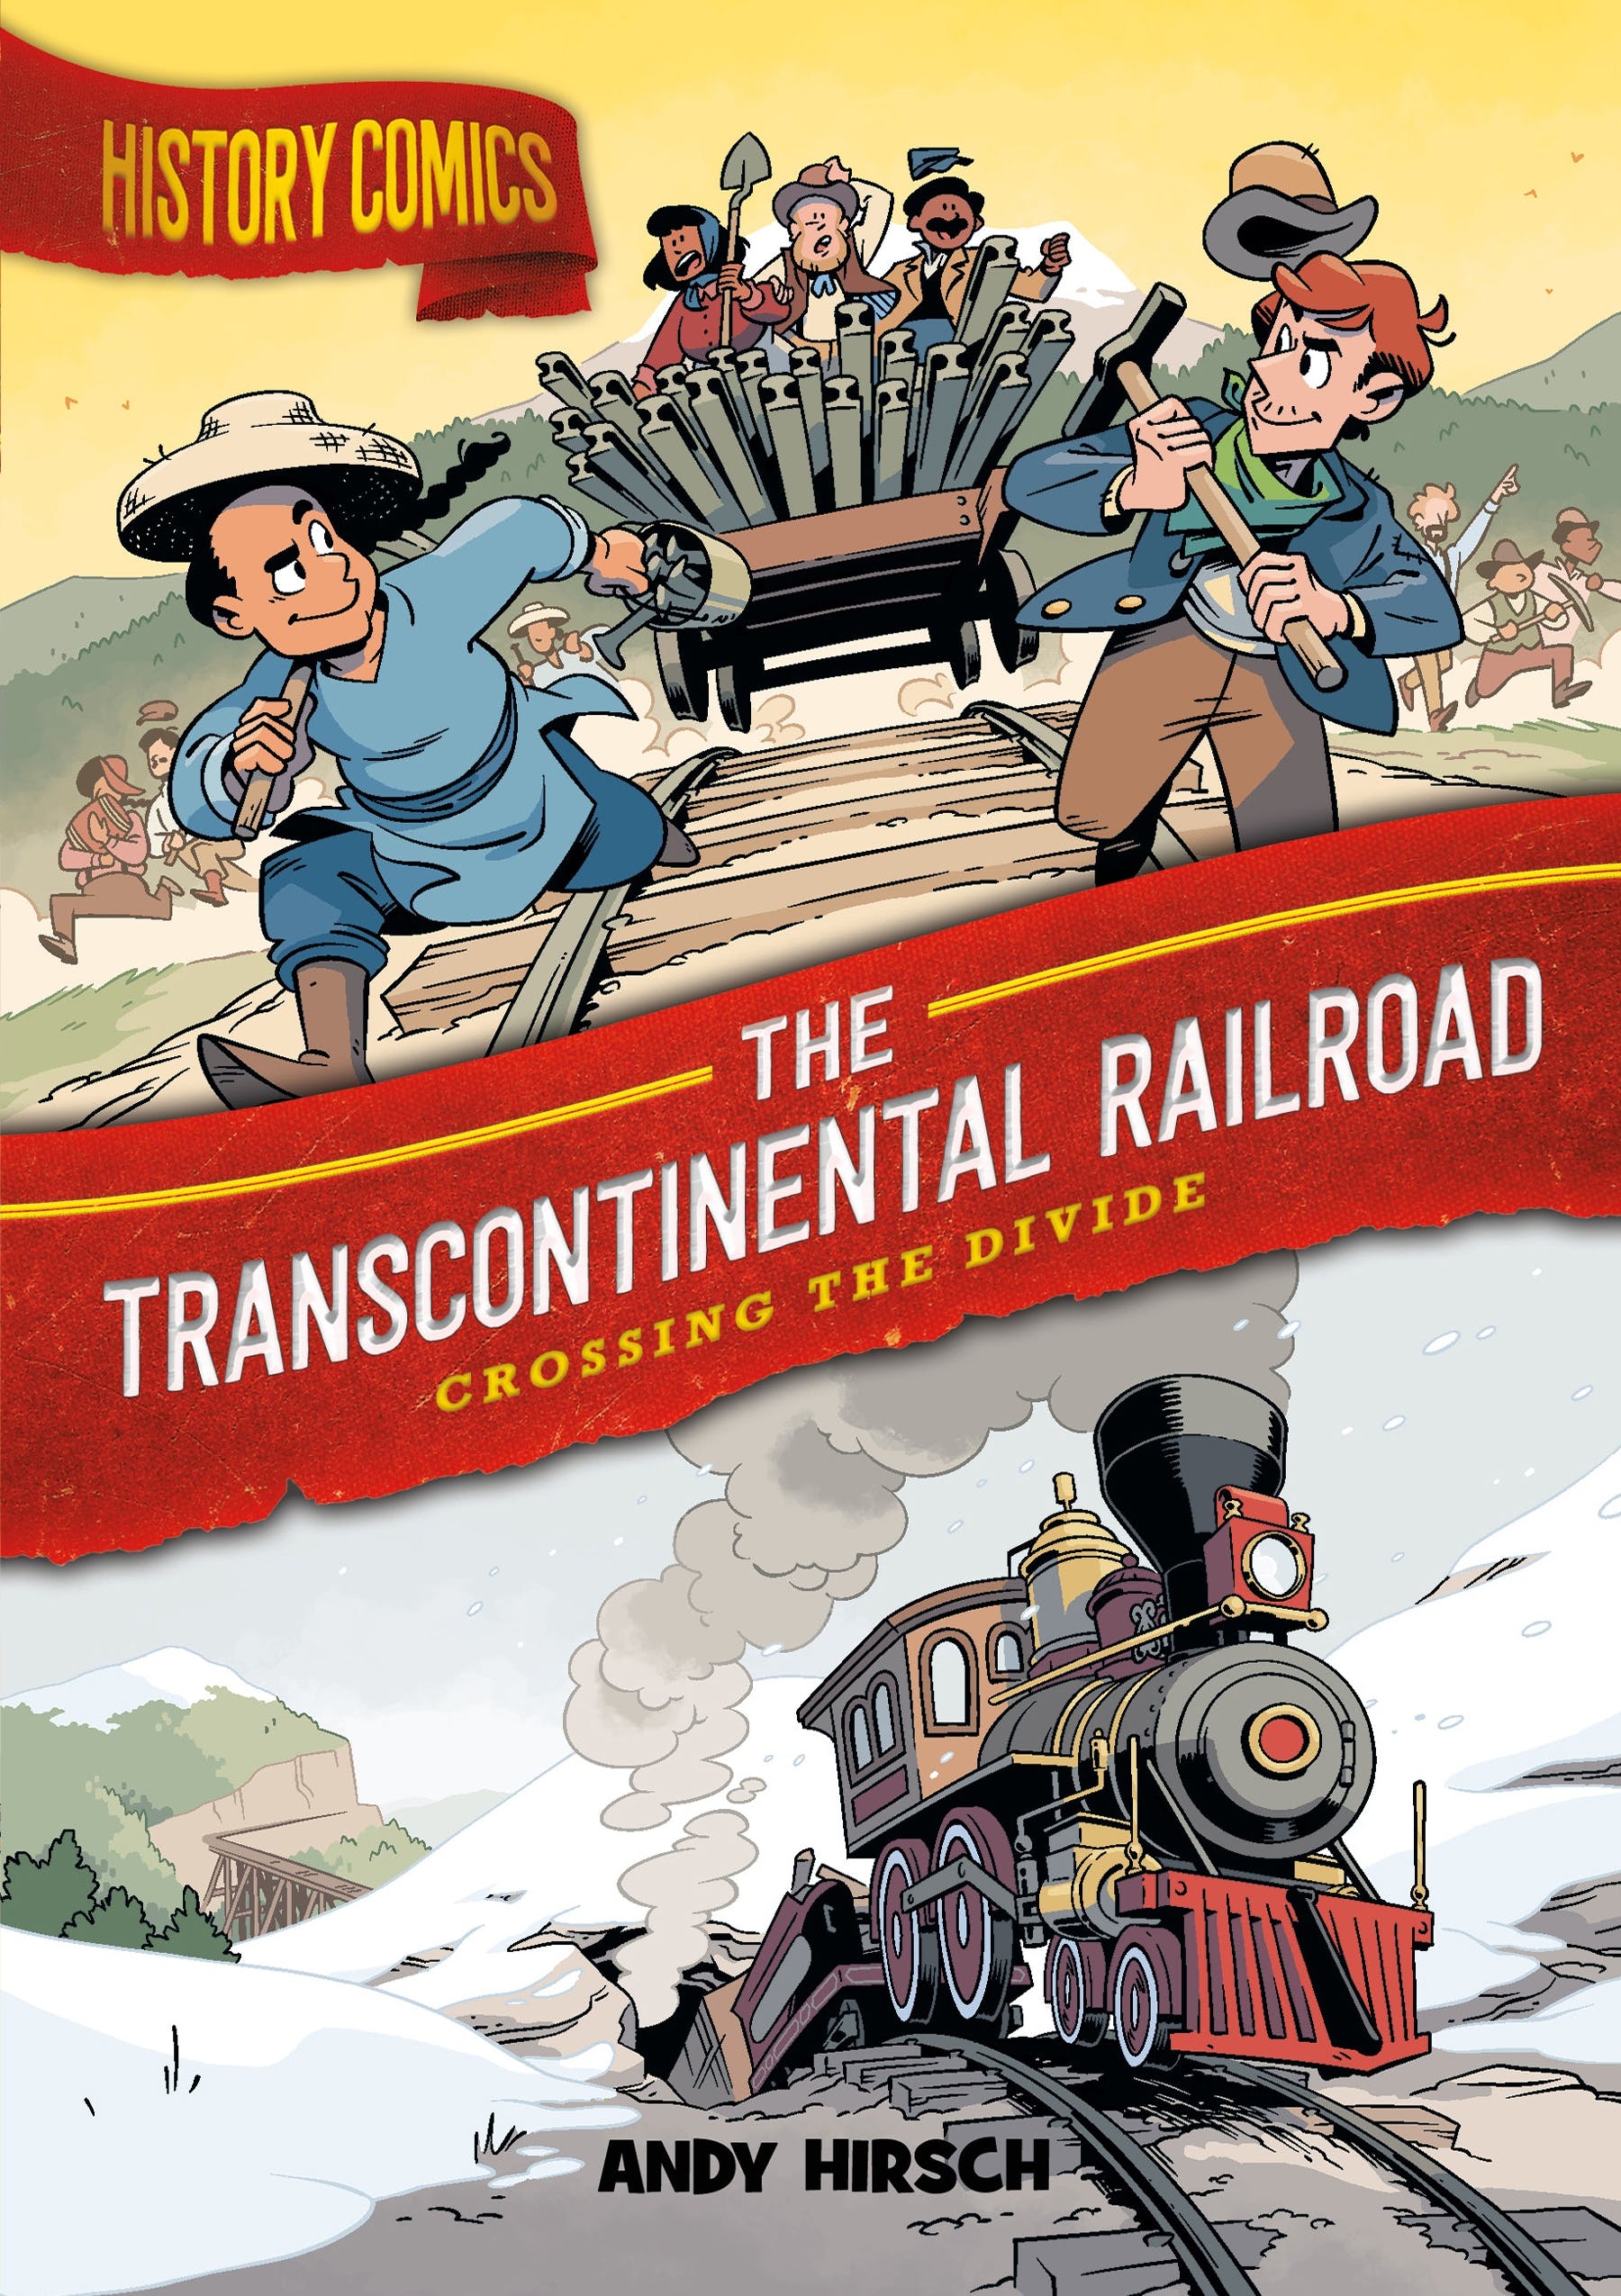 History Comics: The Transcontinental Railroad book cover